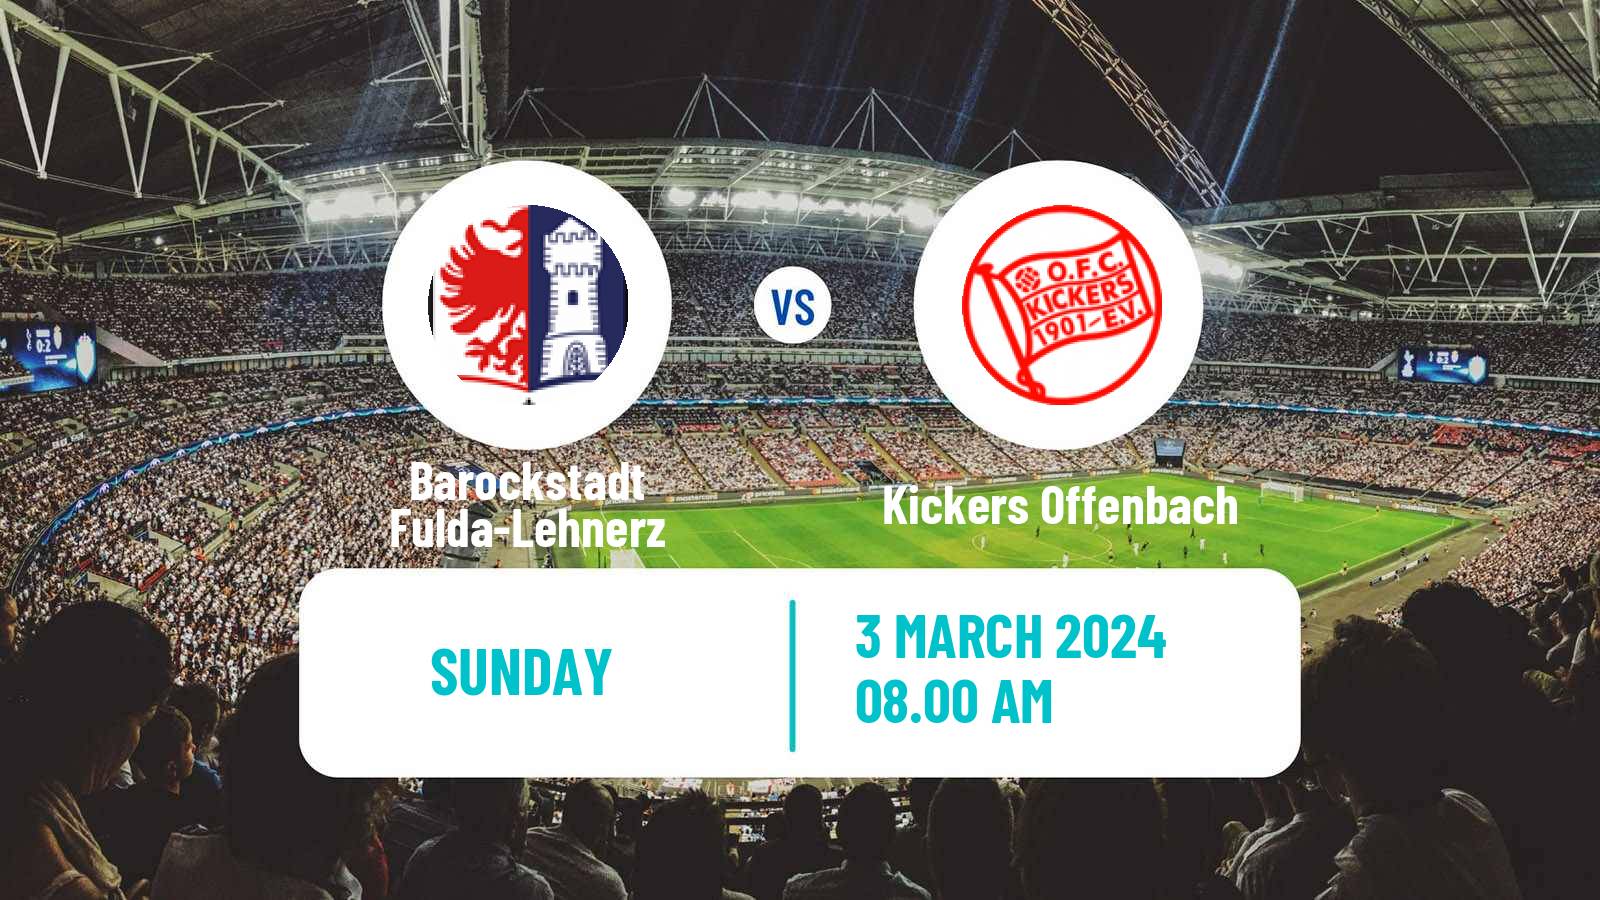 Soccer German Regionalliga Sudwest Barockstadt Fulda-Lehnerz - Kickers Offenbach